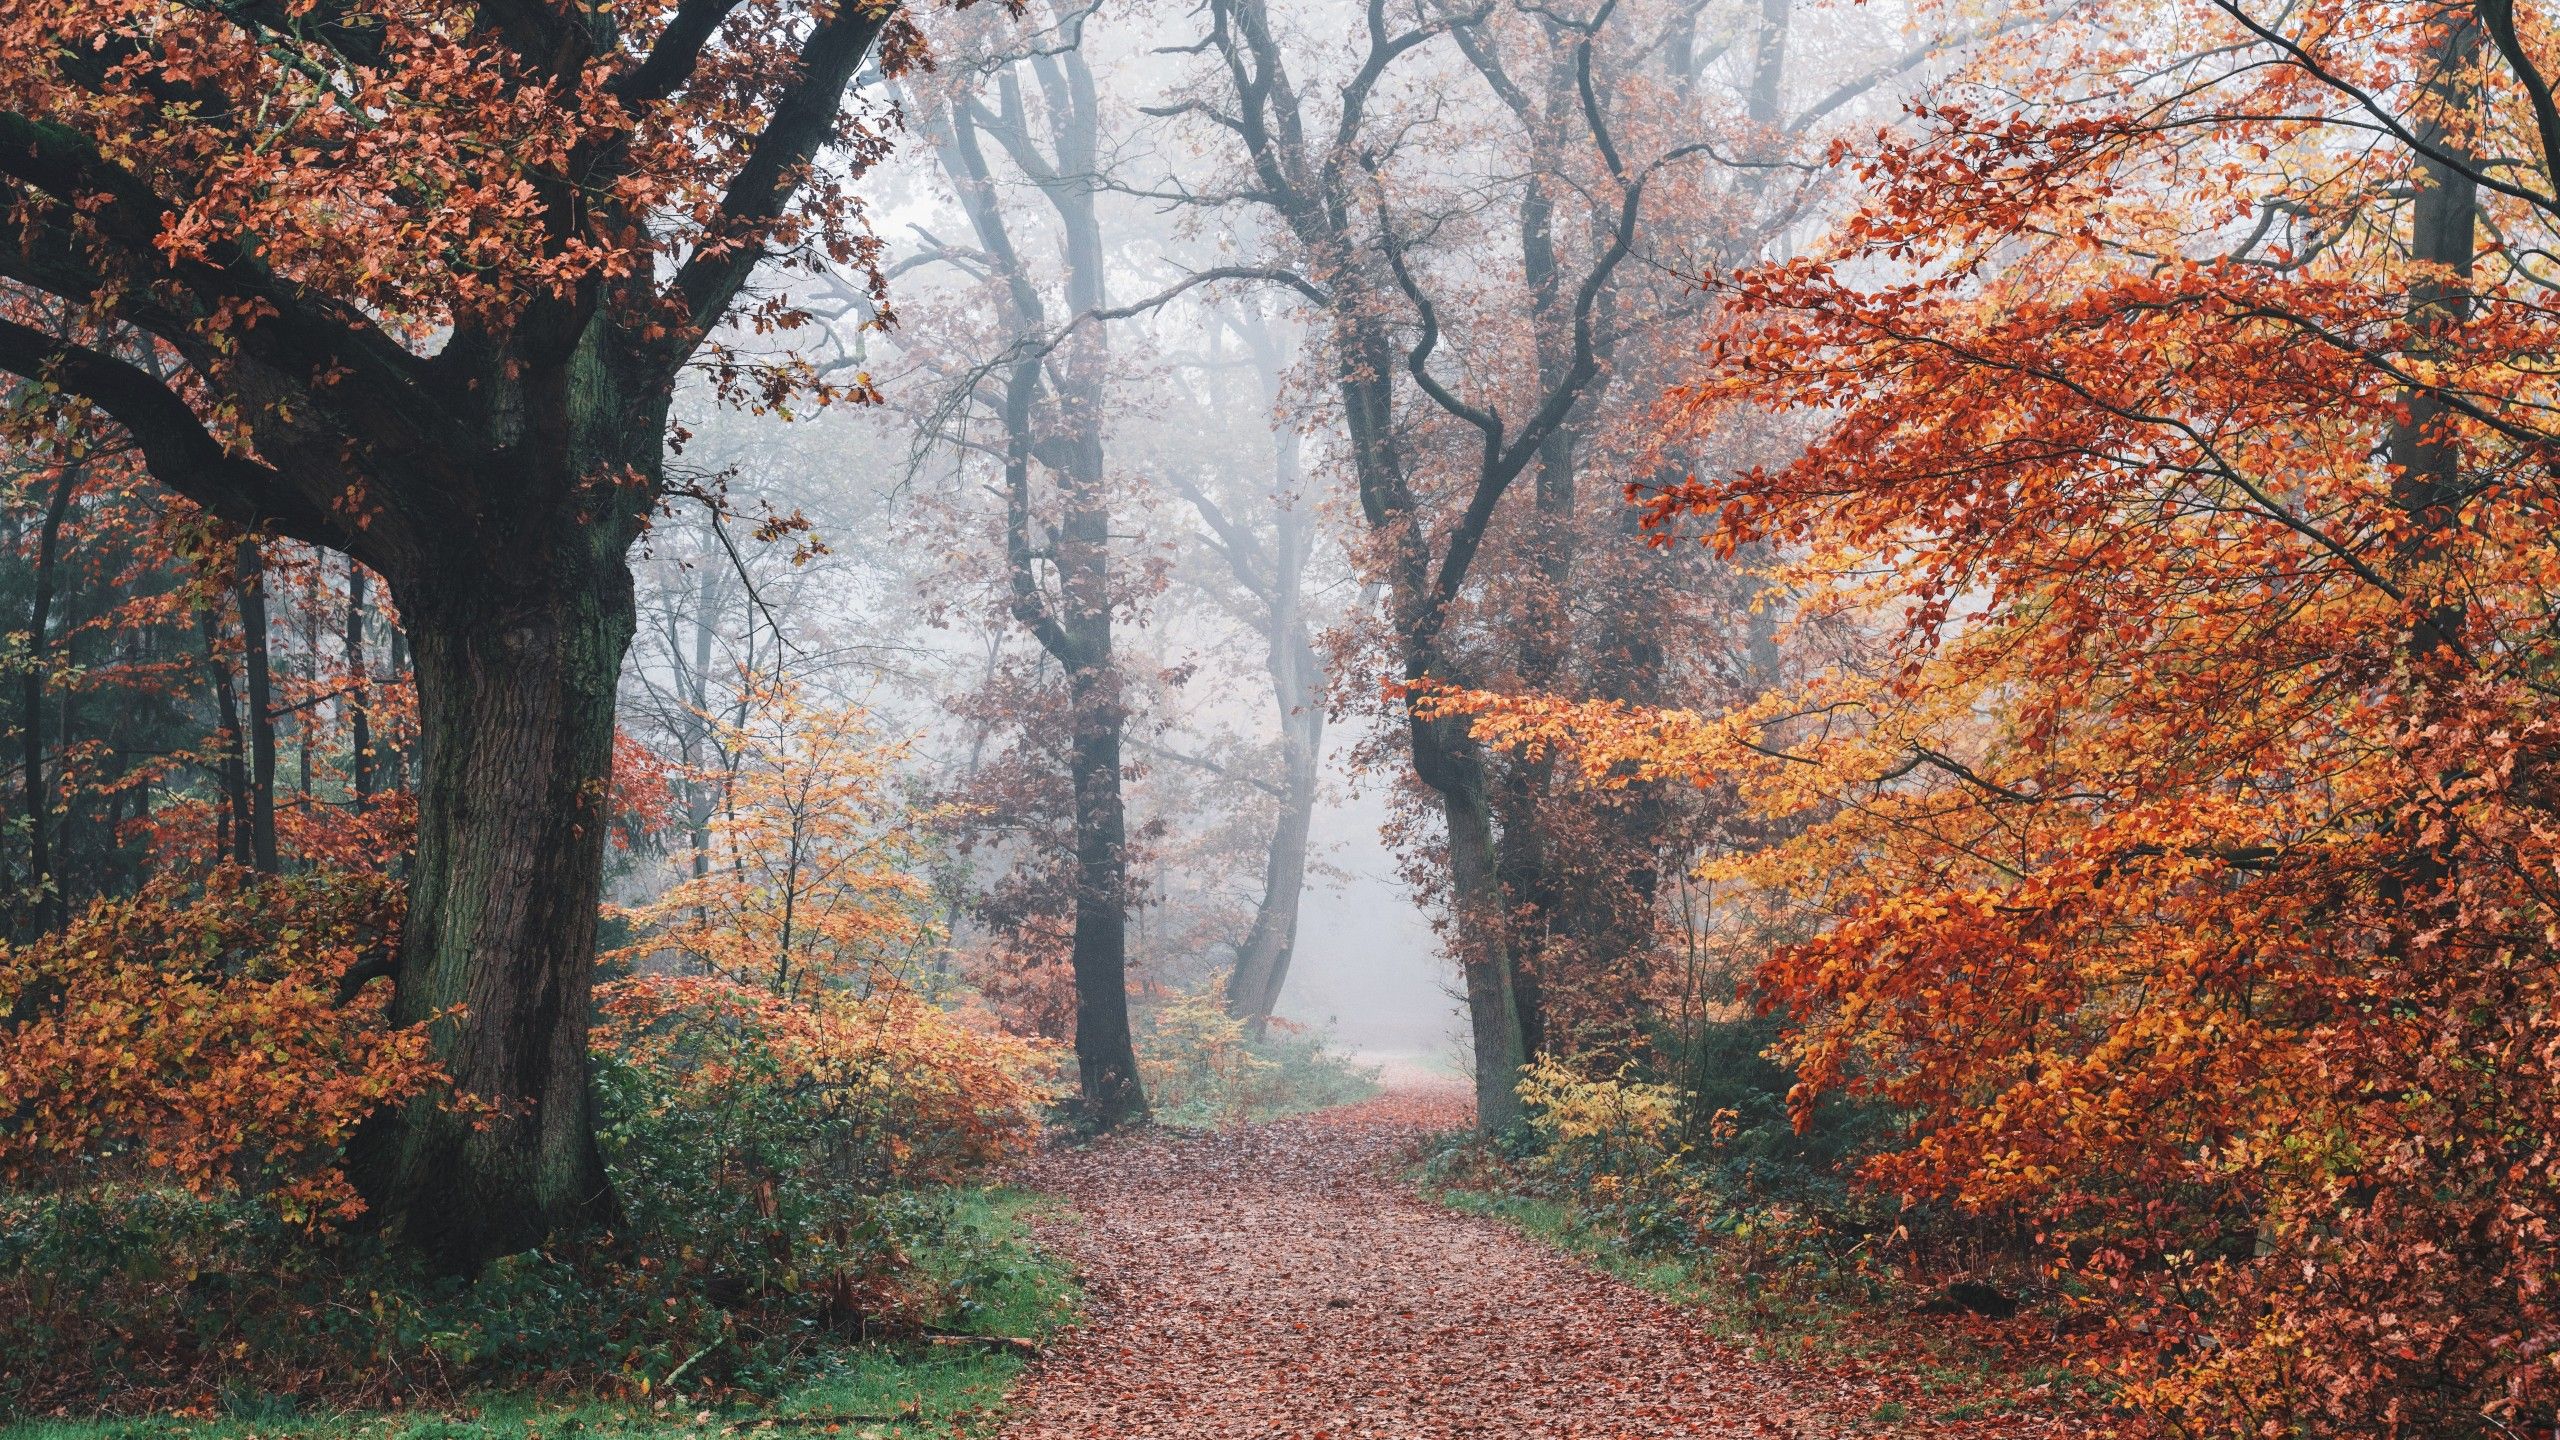 Autumn 4K Wallpaper, Forest, Fall Foliage, Trees, Foggy, Morning, 5K, 8K, Nature